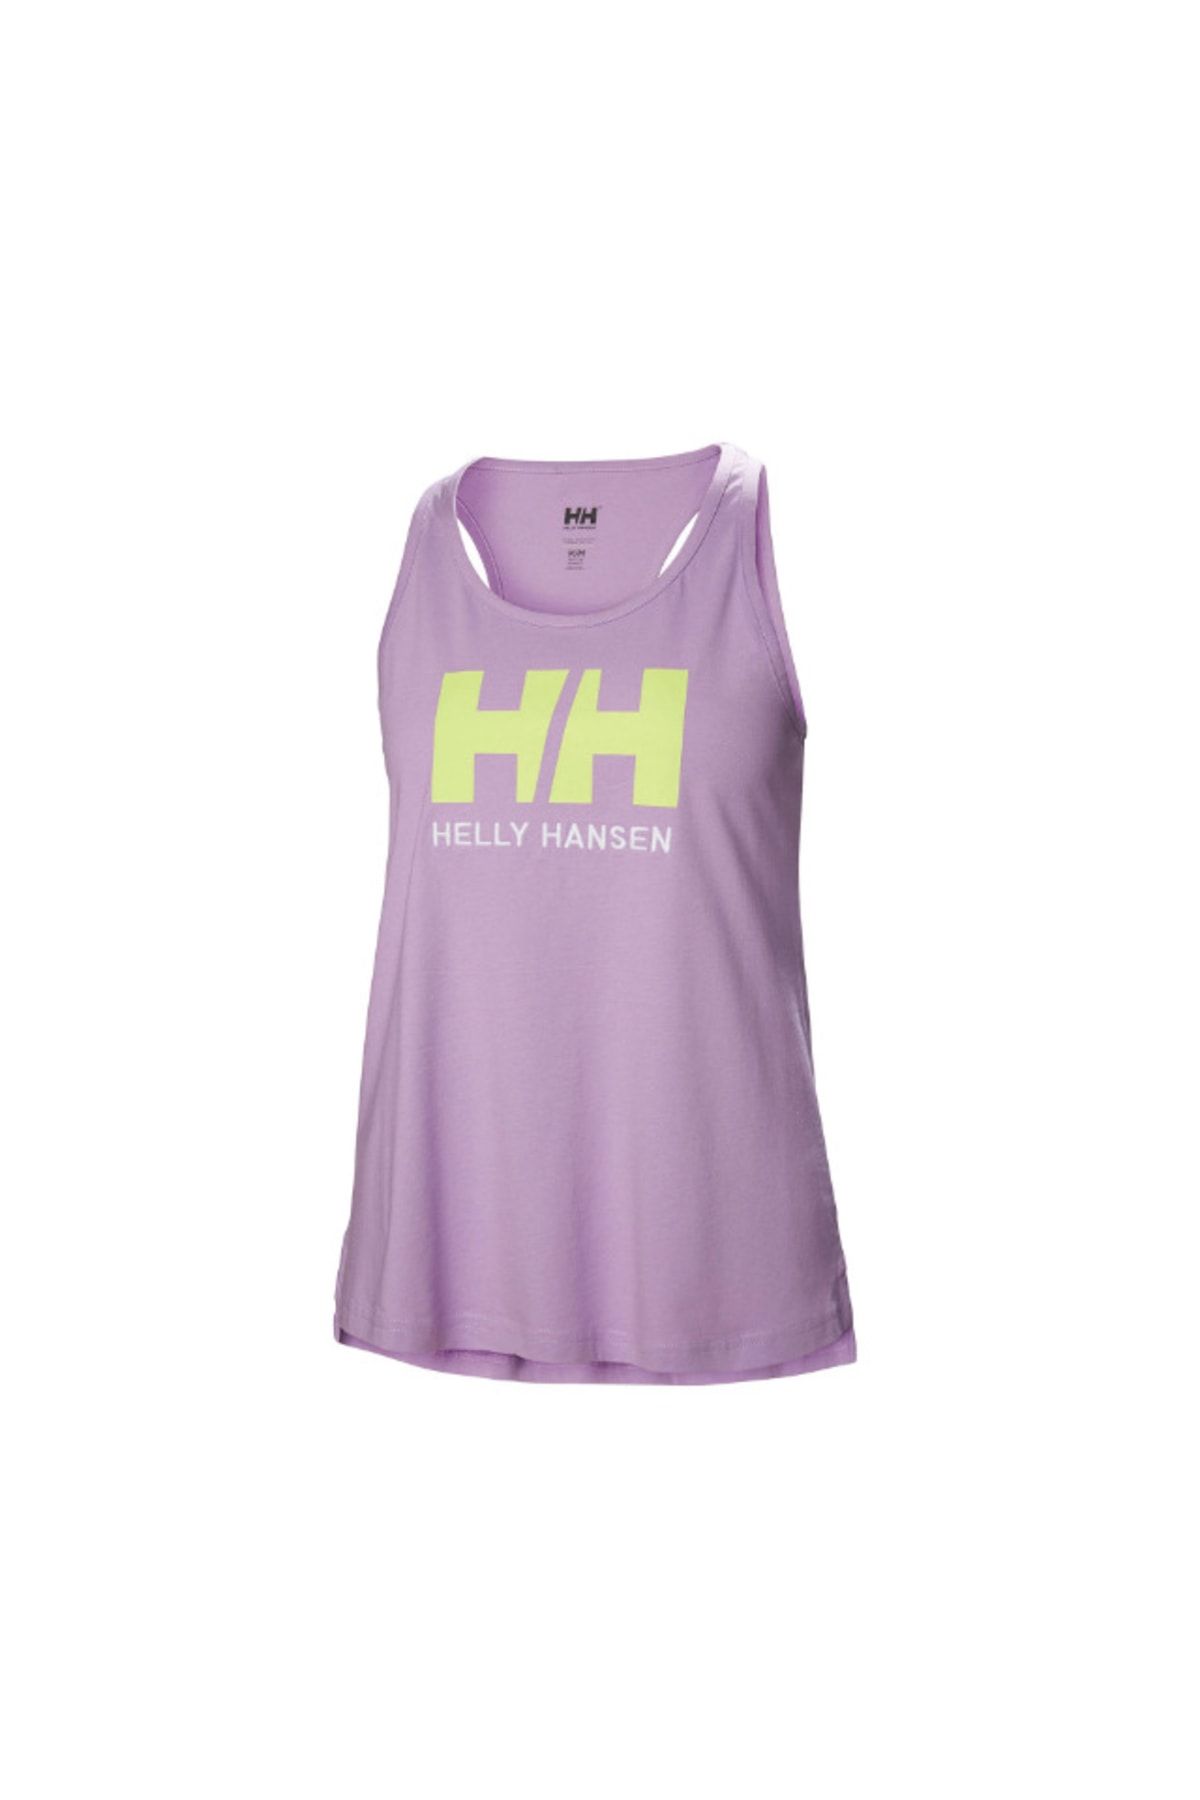 Helly Hansen Kadın Logo Atlet